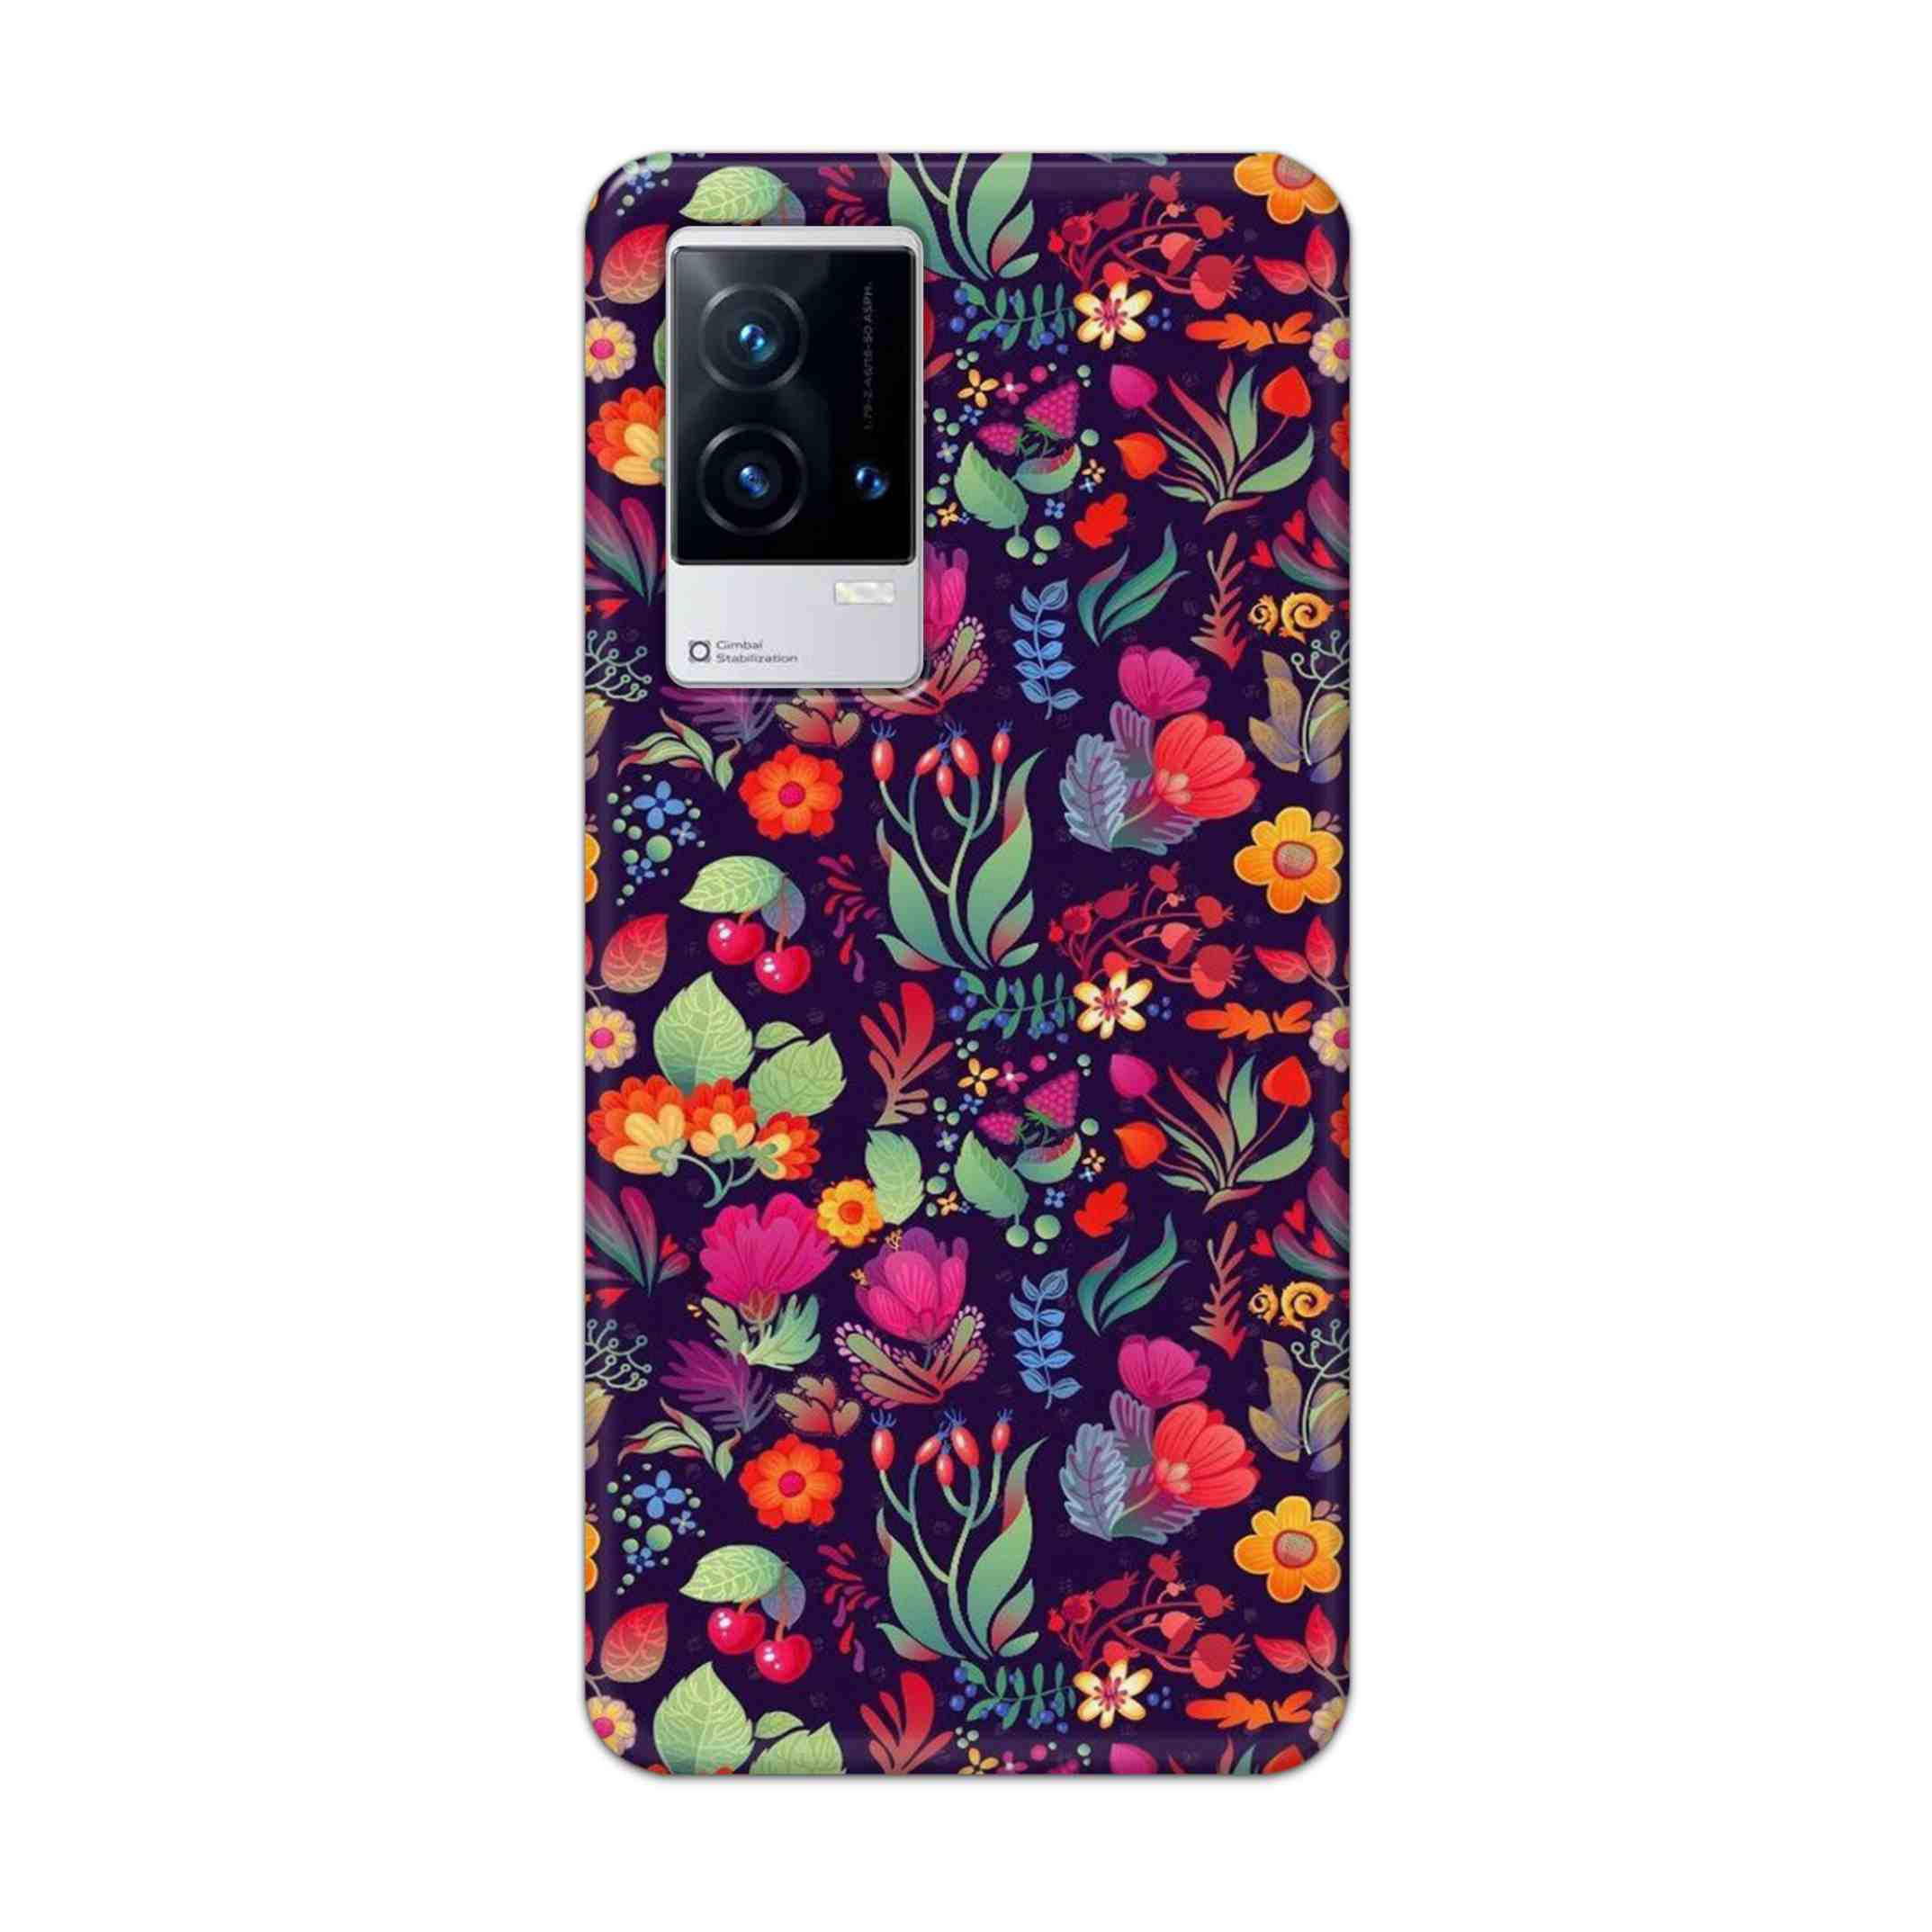 Buy Fruits Flower Hard Back Mobile Phone Case Cover For Vivo iQOO 9 5G Online